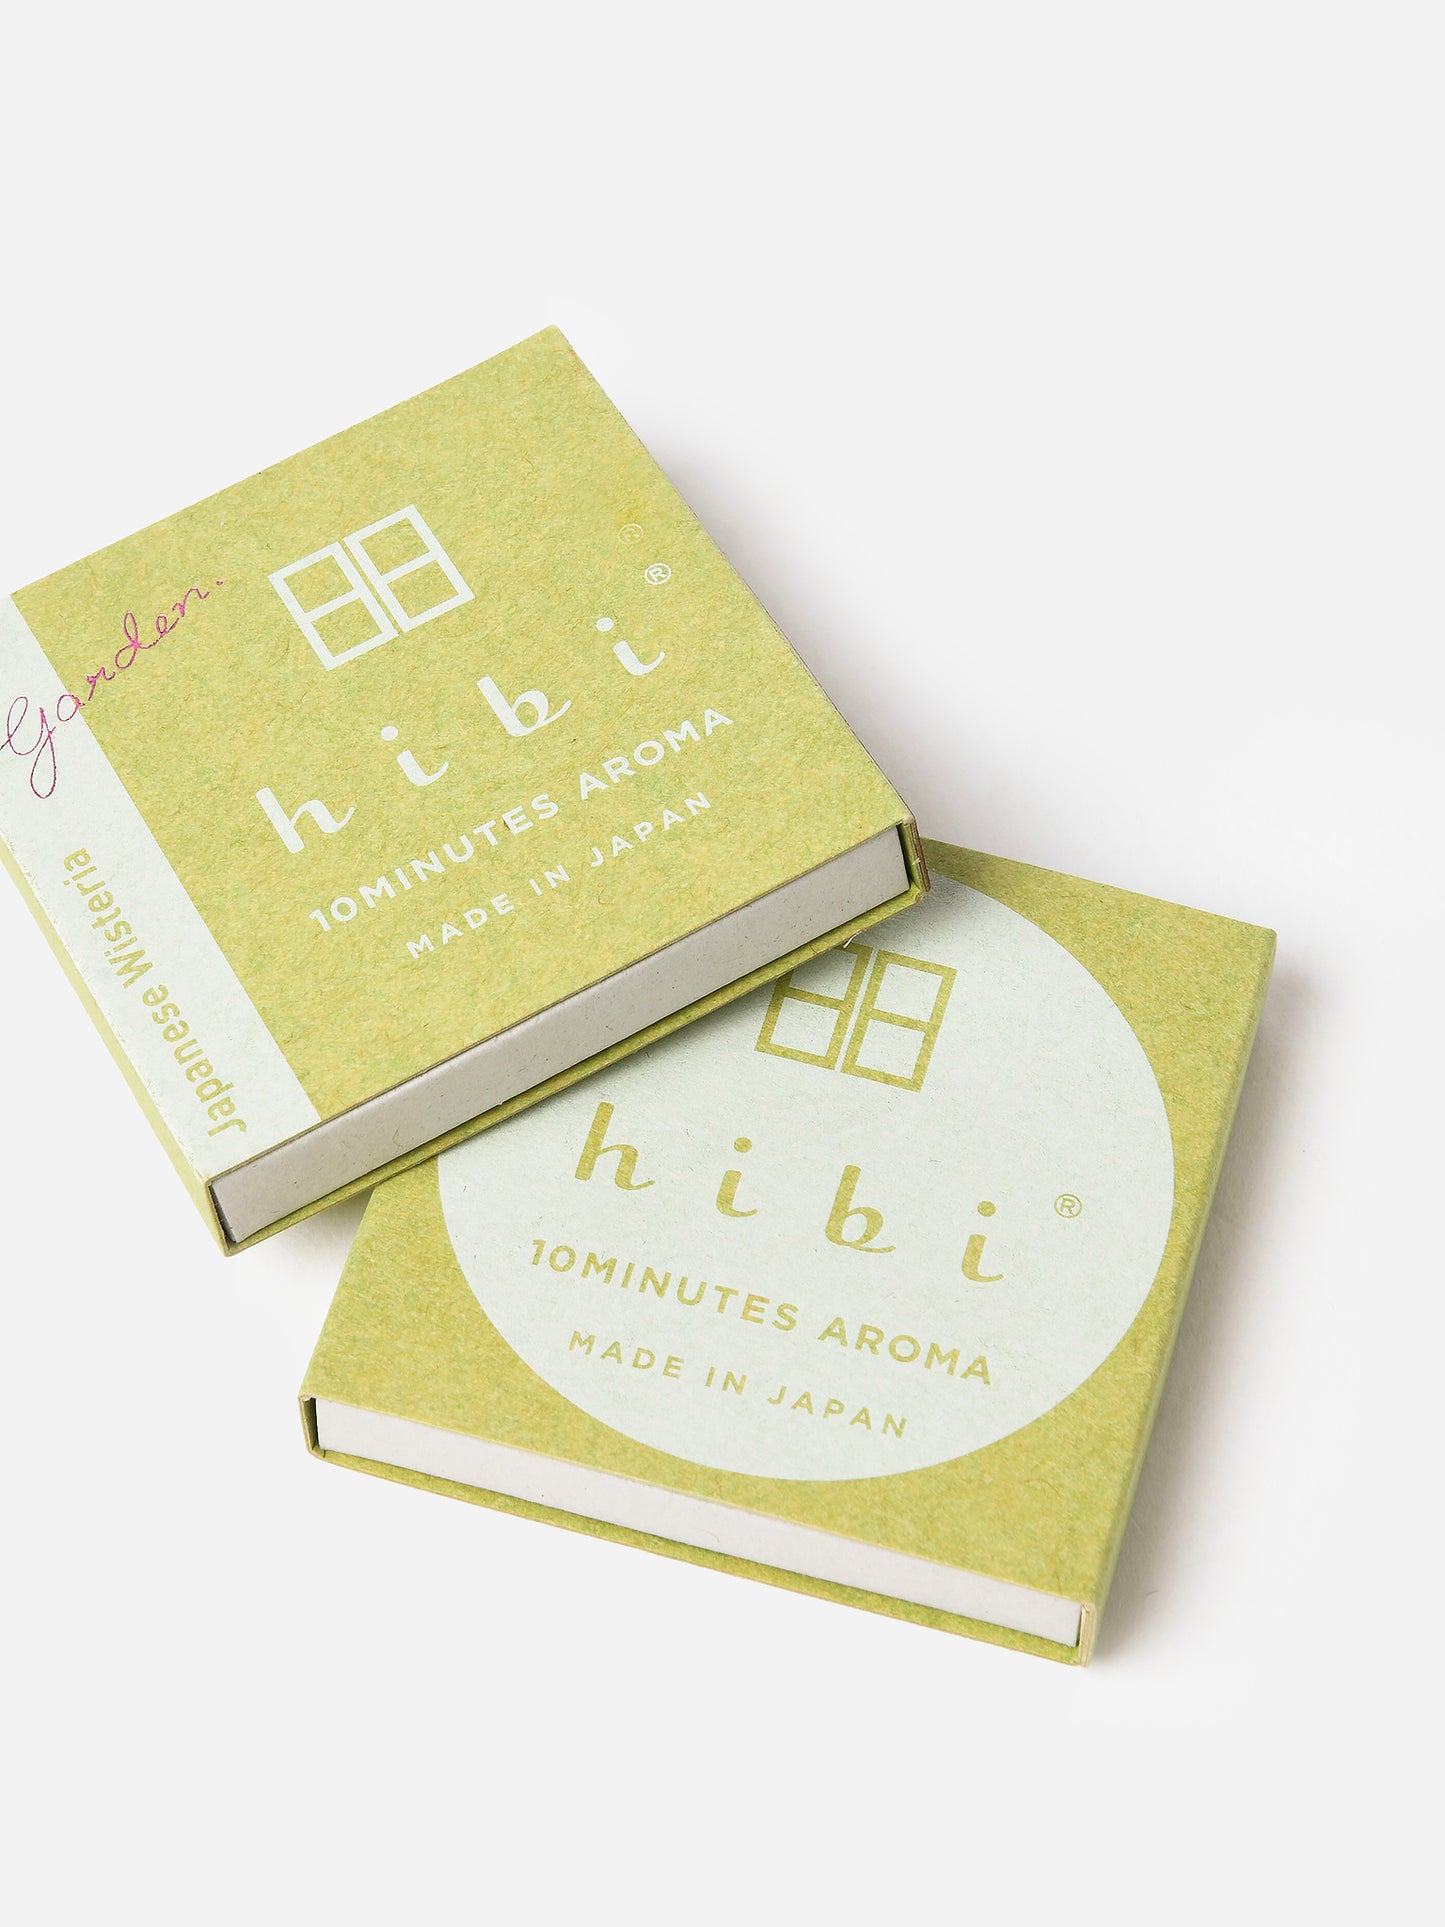 Hibi Incense Matches Box